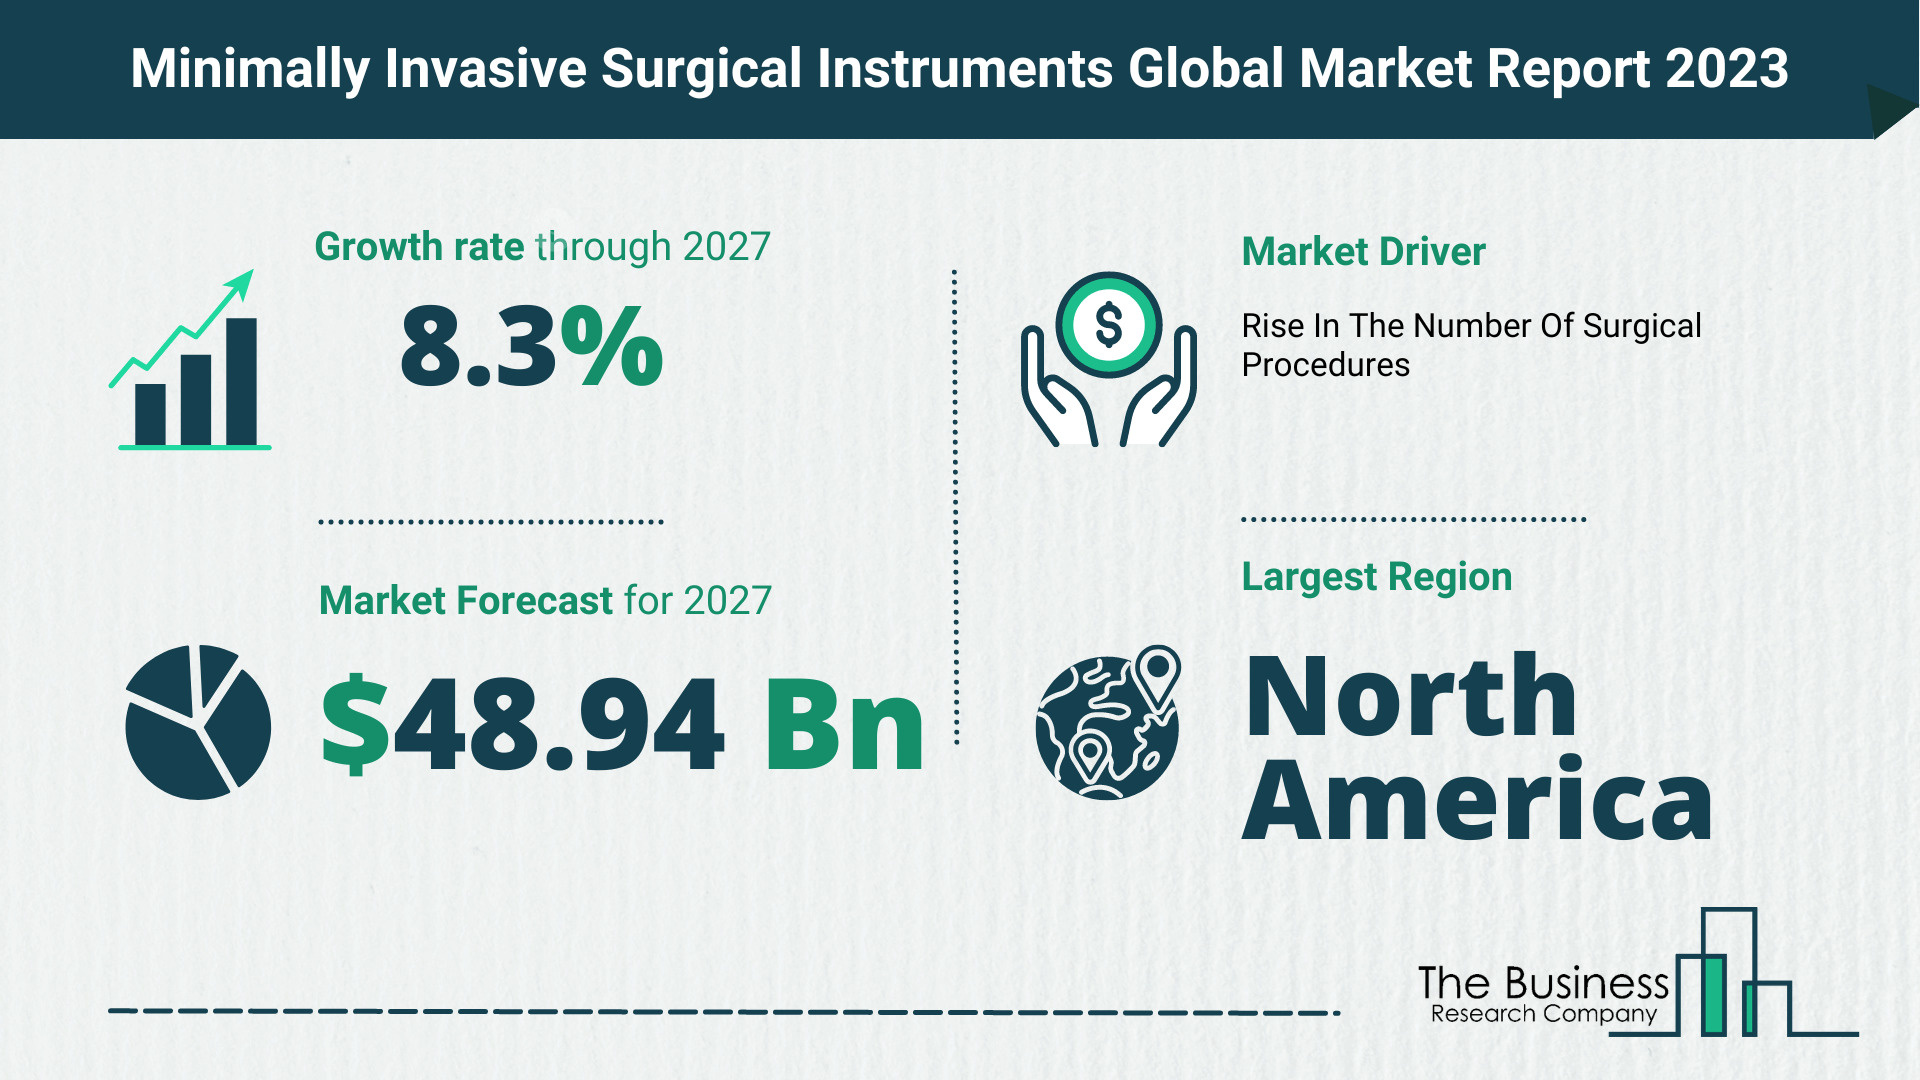 Minimally Invasive Surgical Instruments Market